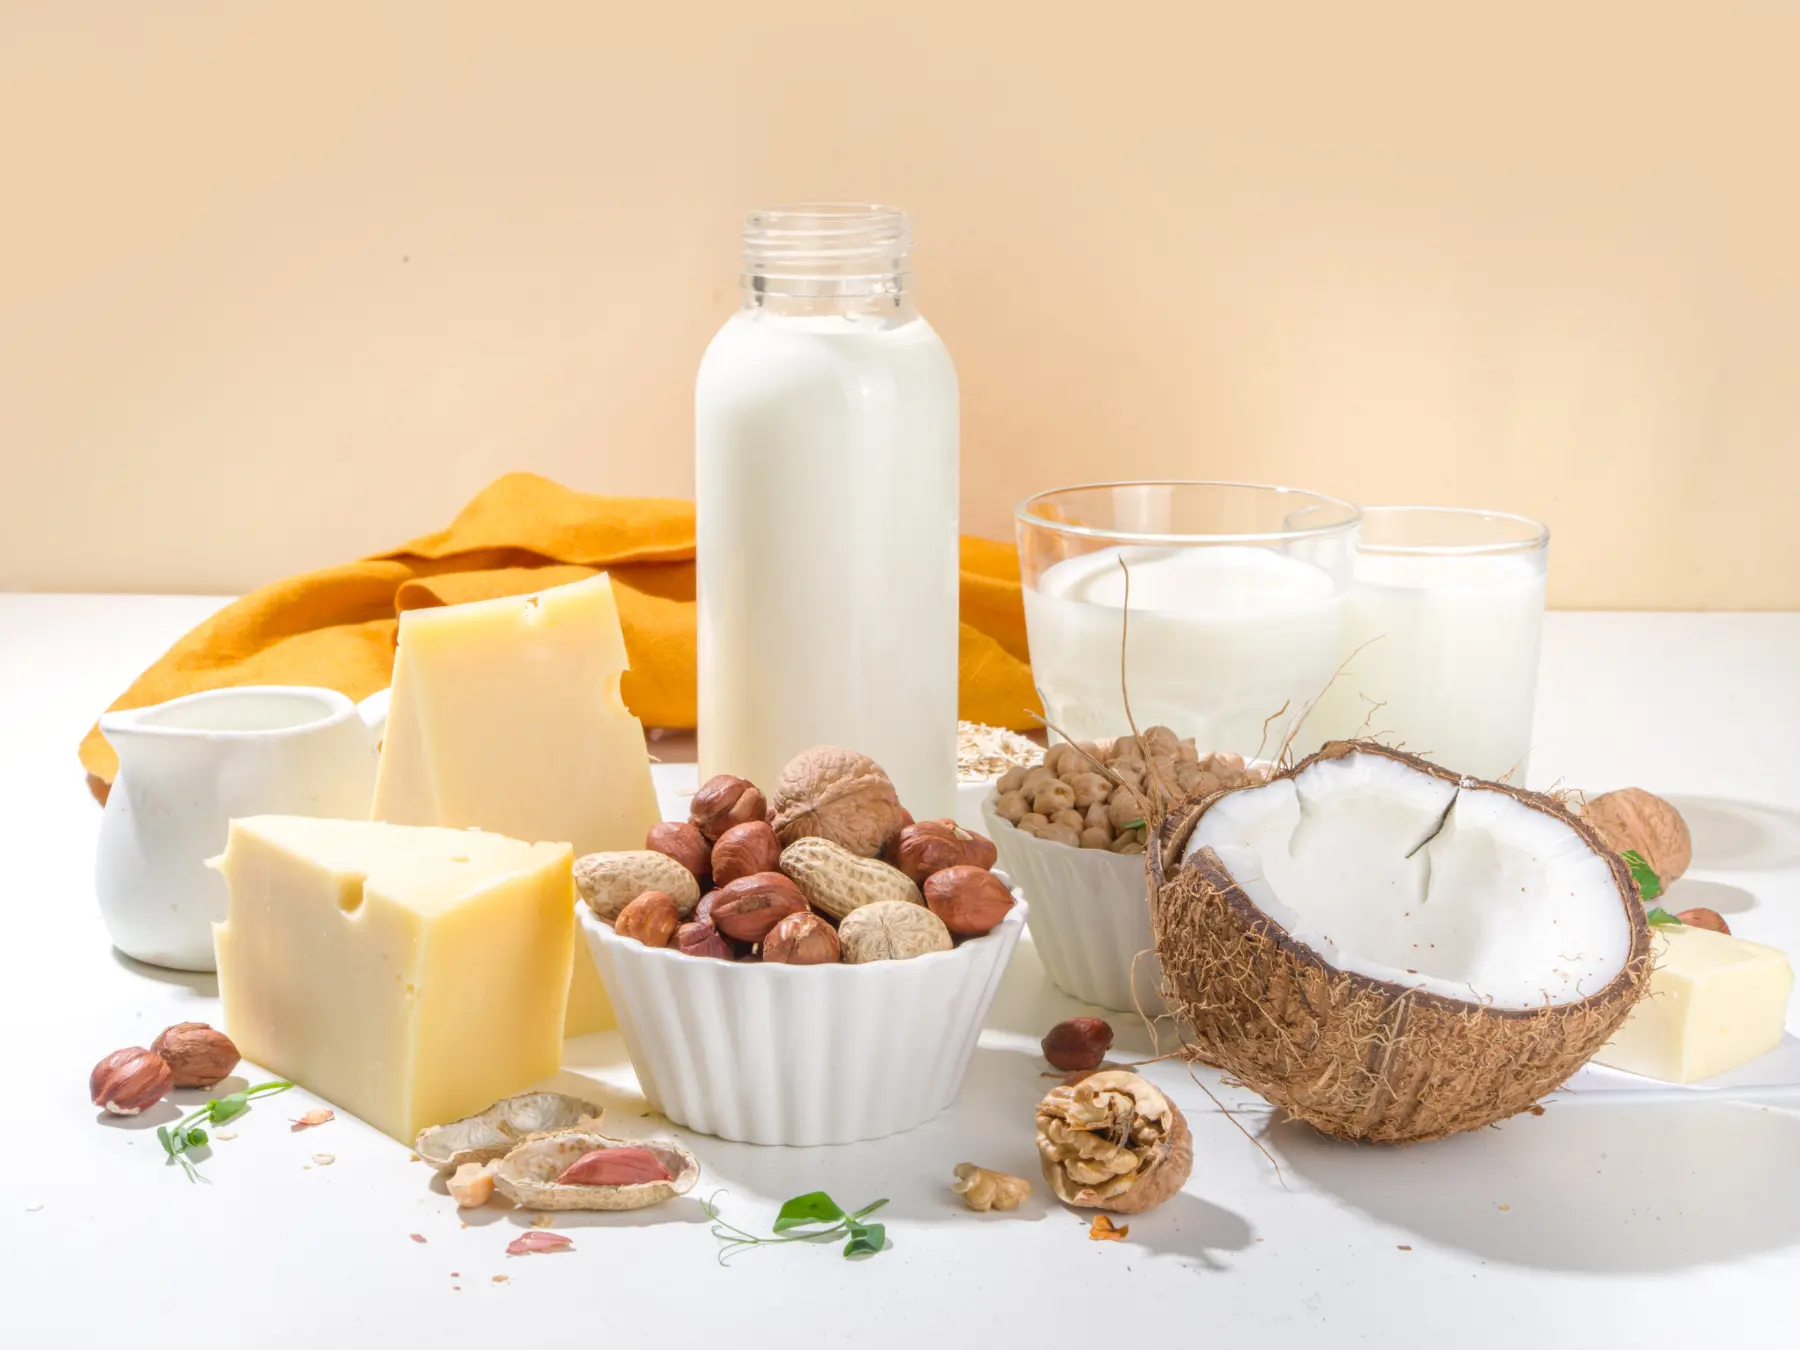 Diet that avoids dairy crossword clue